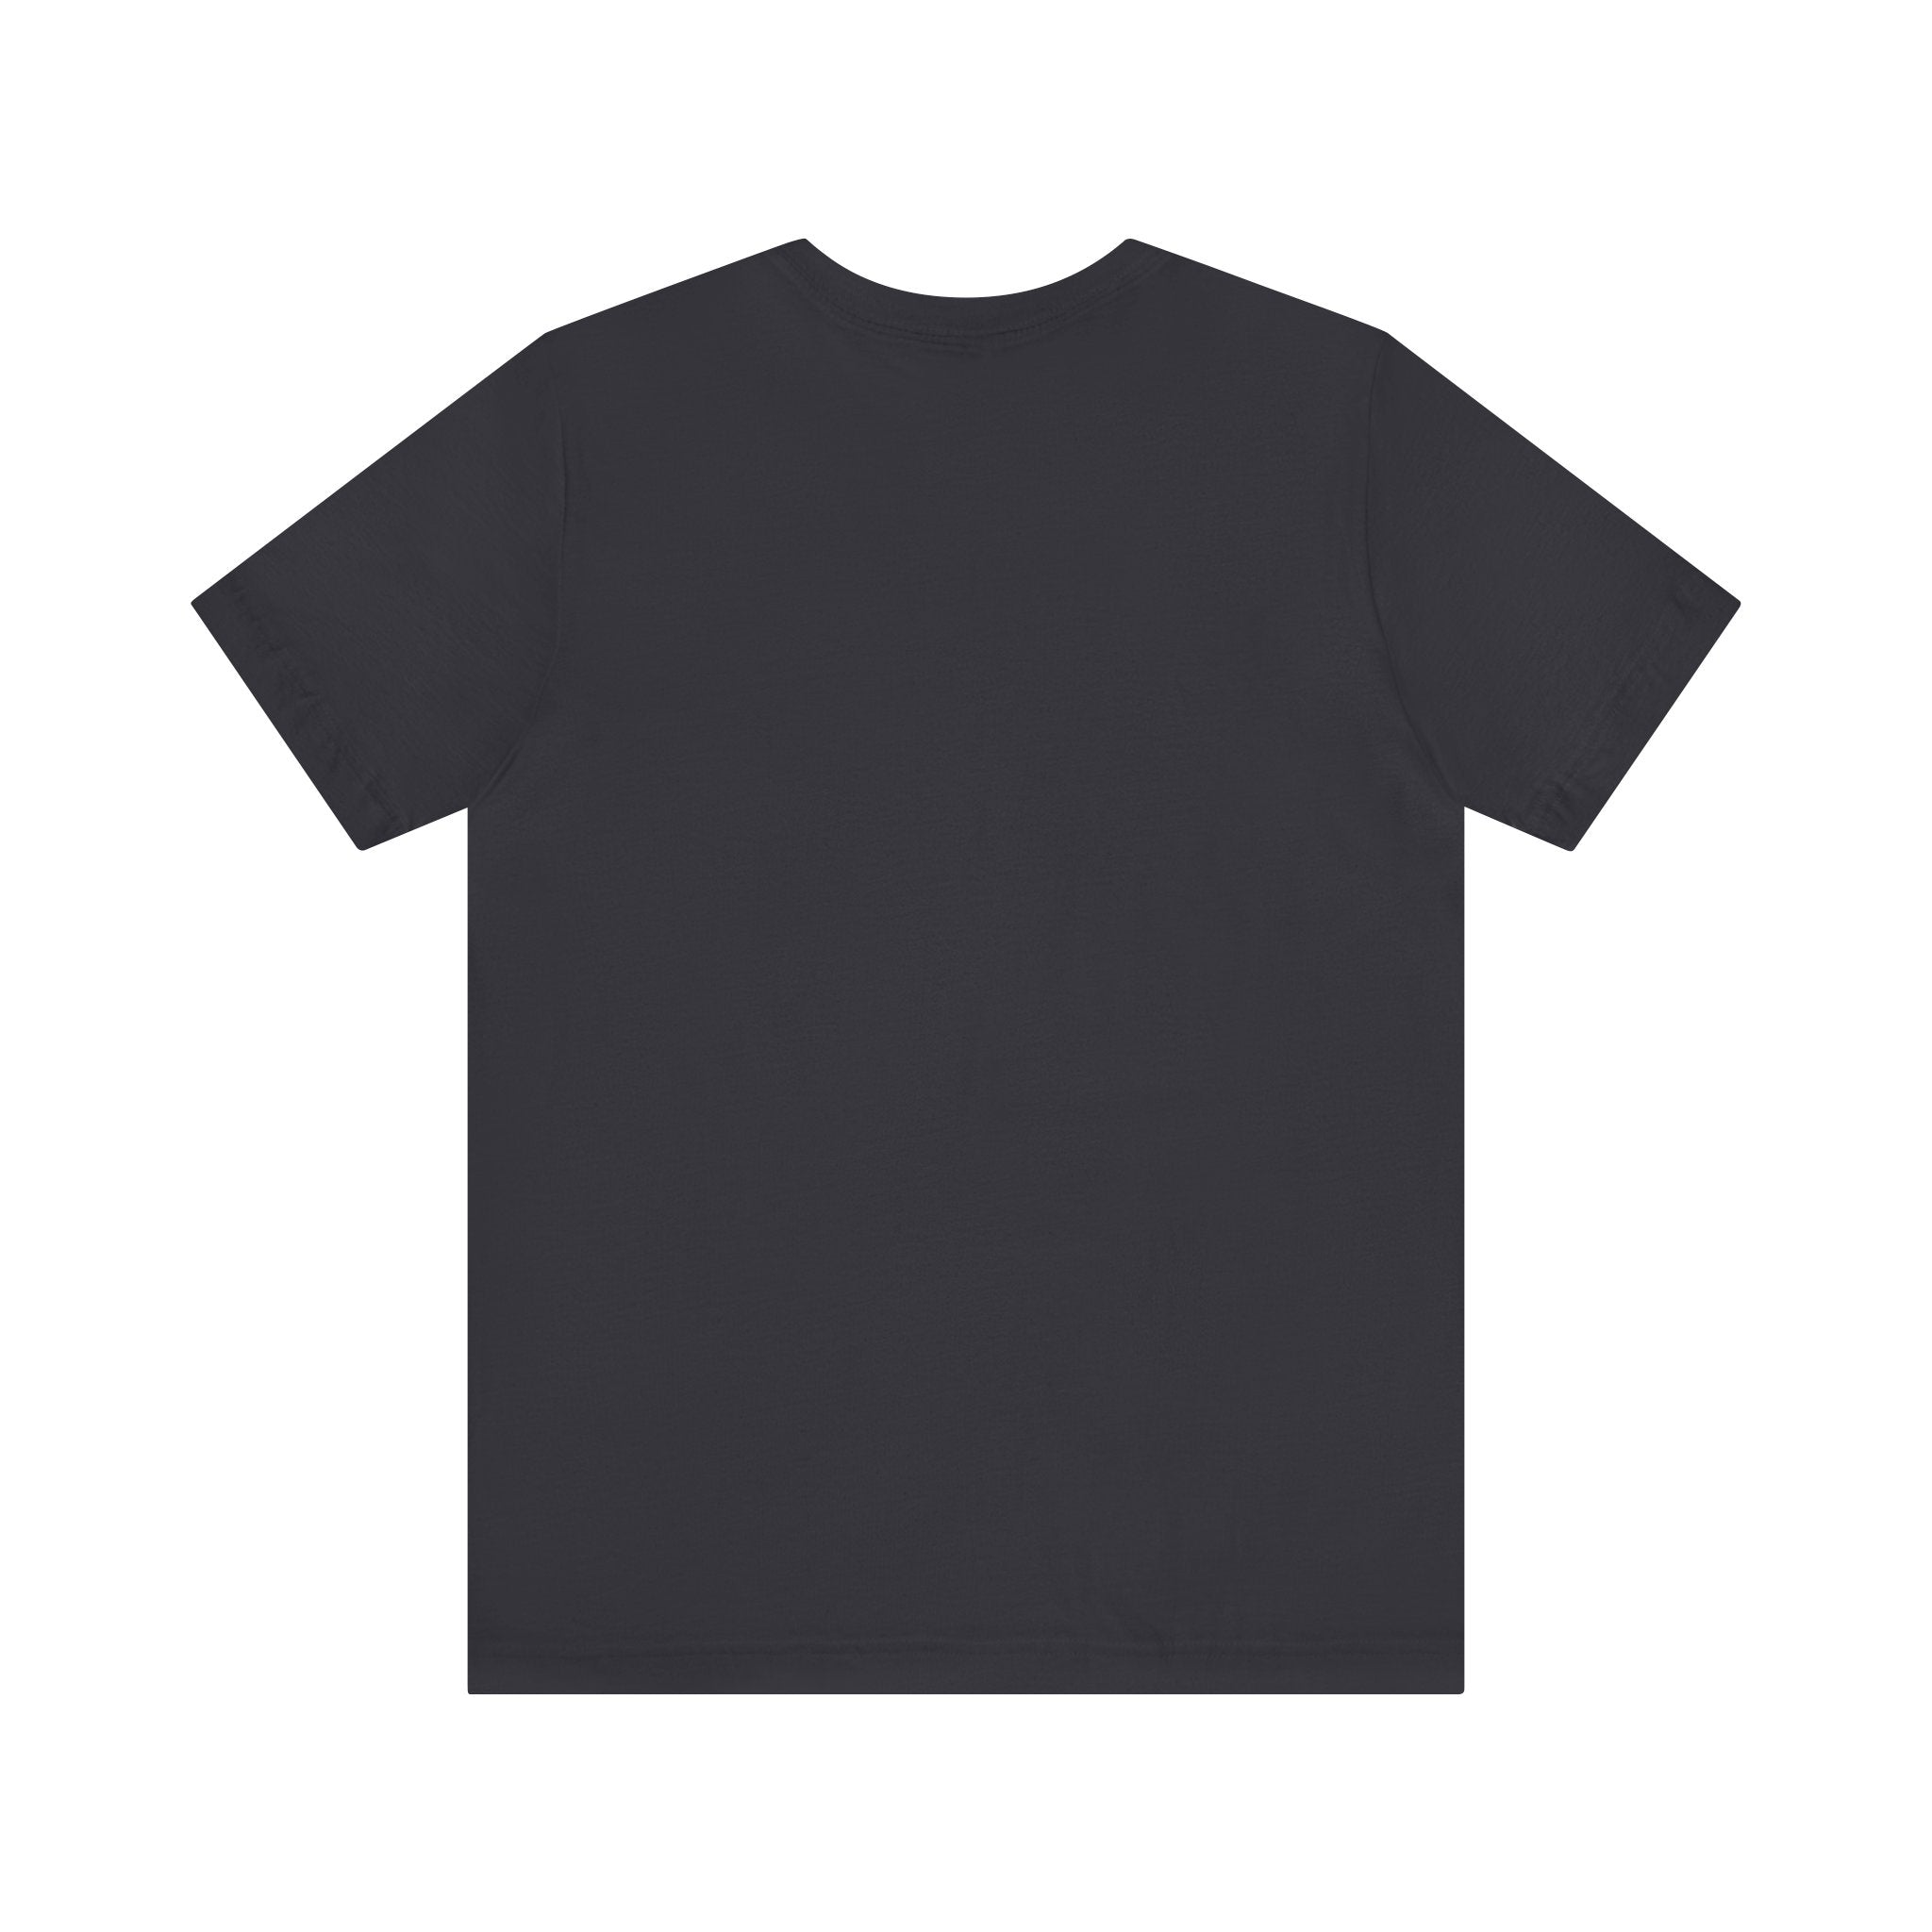 Hope Unisex Jersey Tee, Women's Clothing, Crew Neck T-shirt, Regular Fit, DTG Printed Shirt